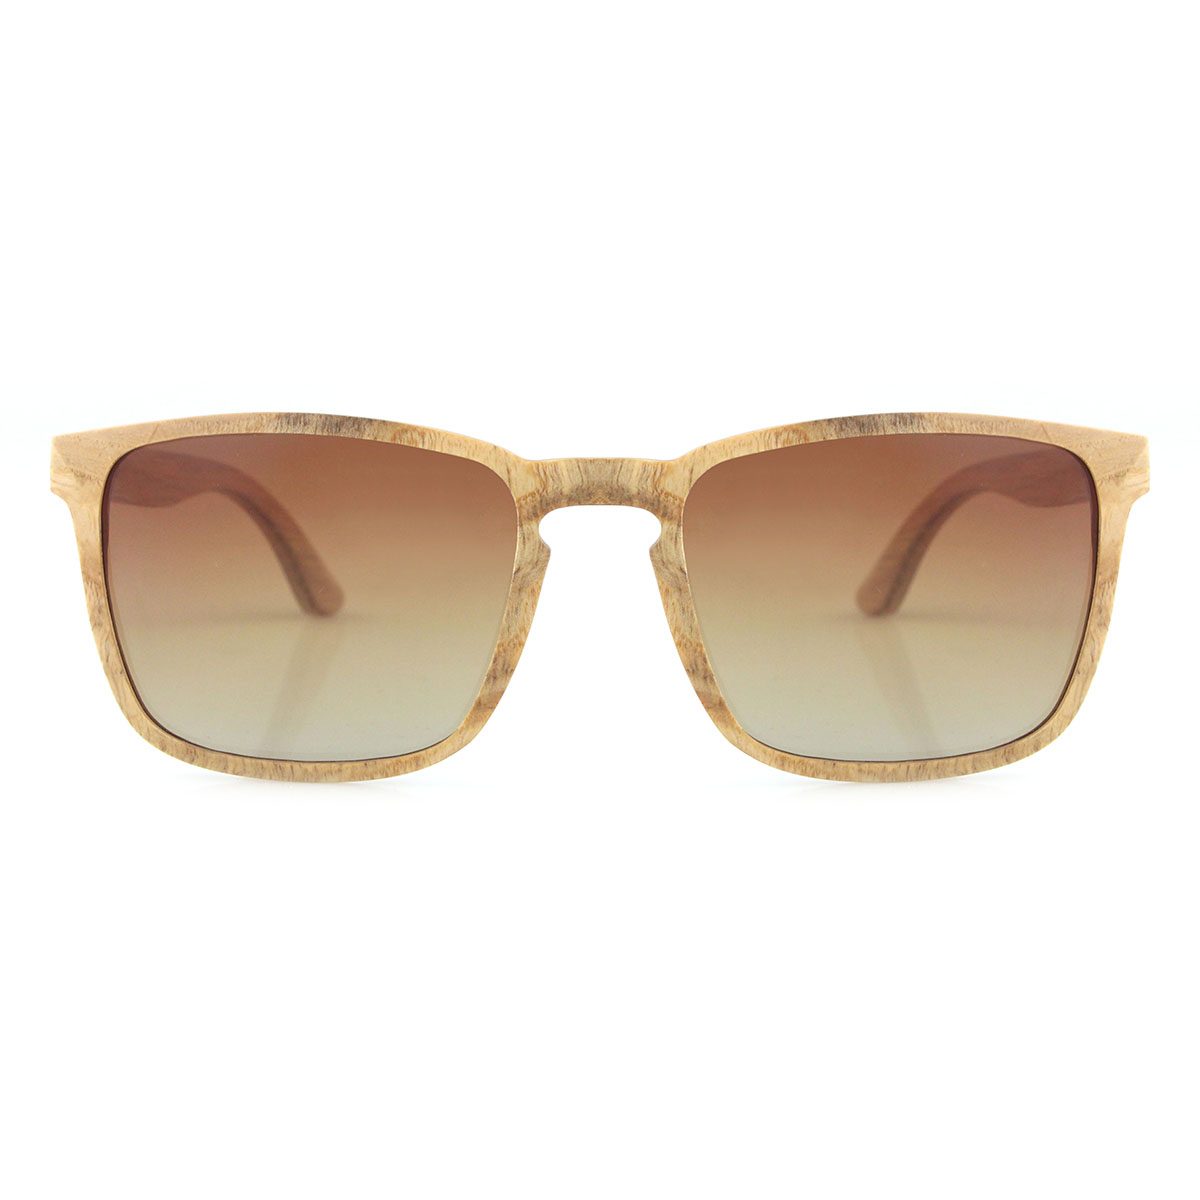 Vintage-wooden-sunglasses